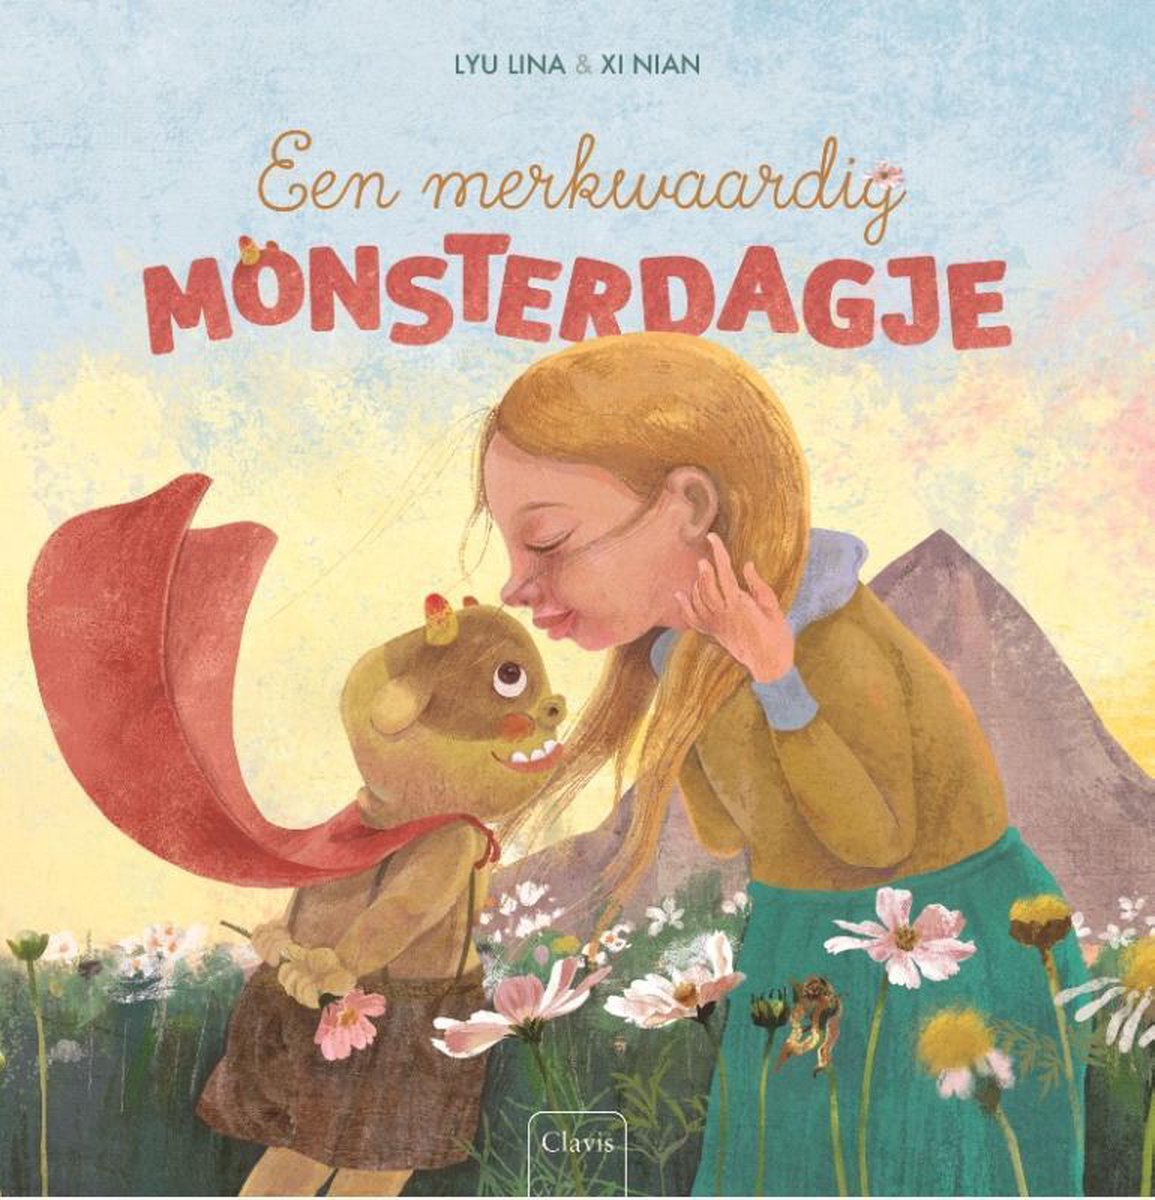 Merkwaardig Monsterdagje - Prentenboek voor brave en minder brave kindertjes vanaf 4 jaar